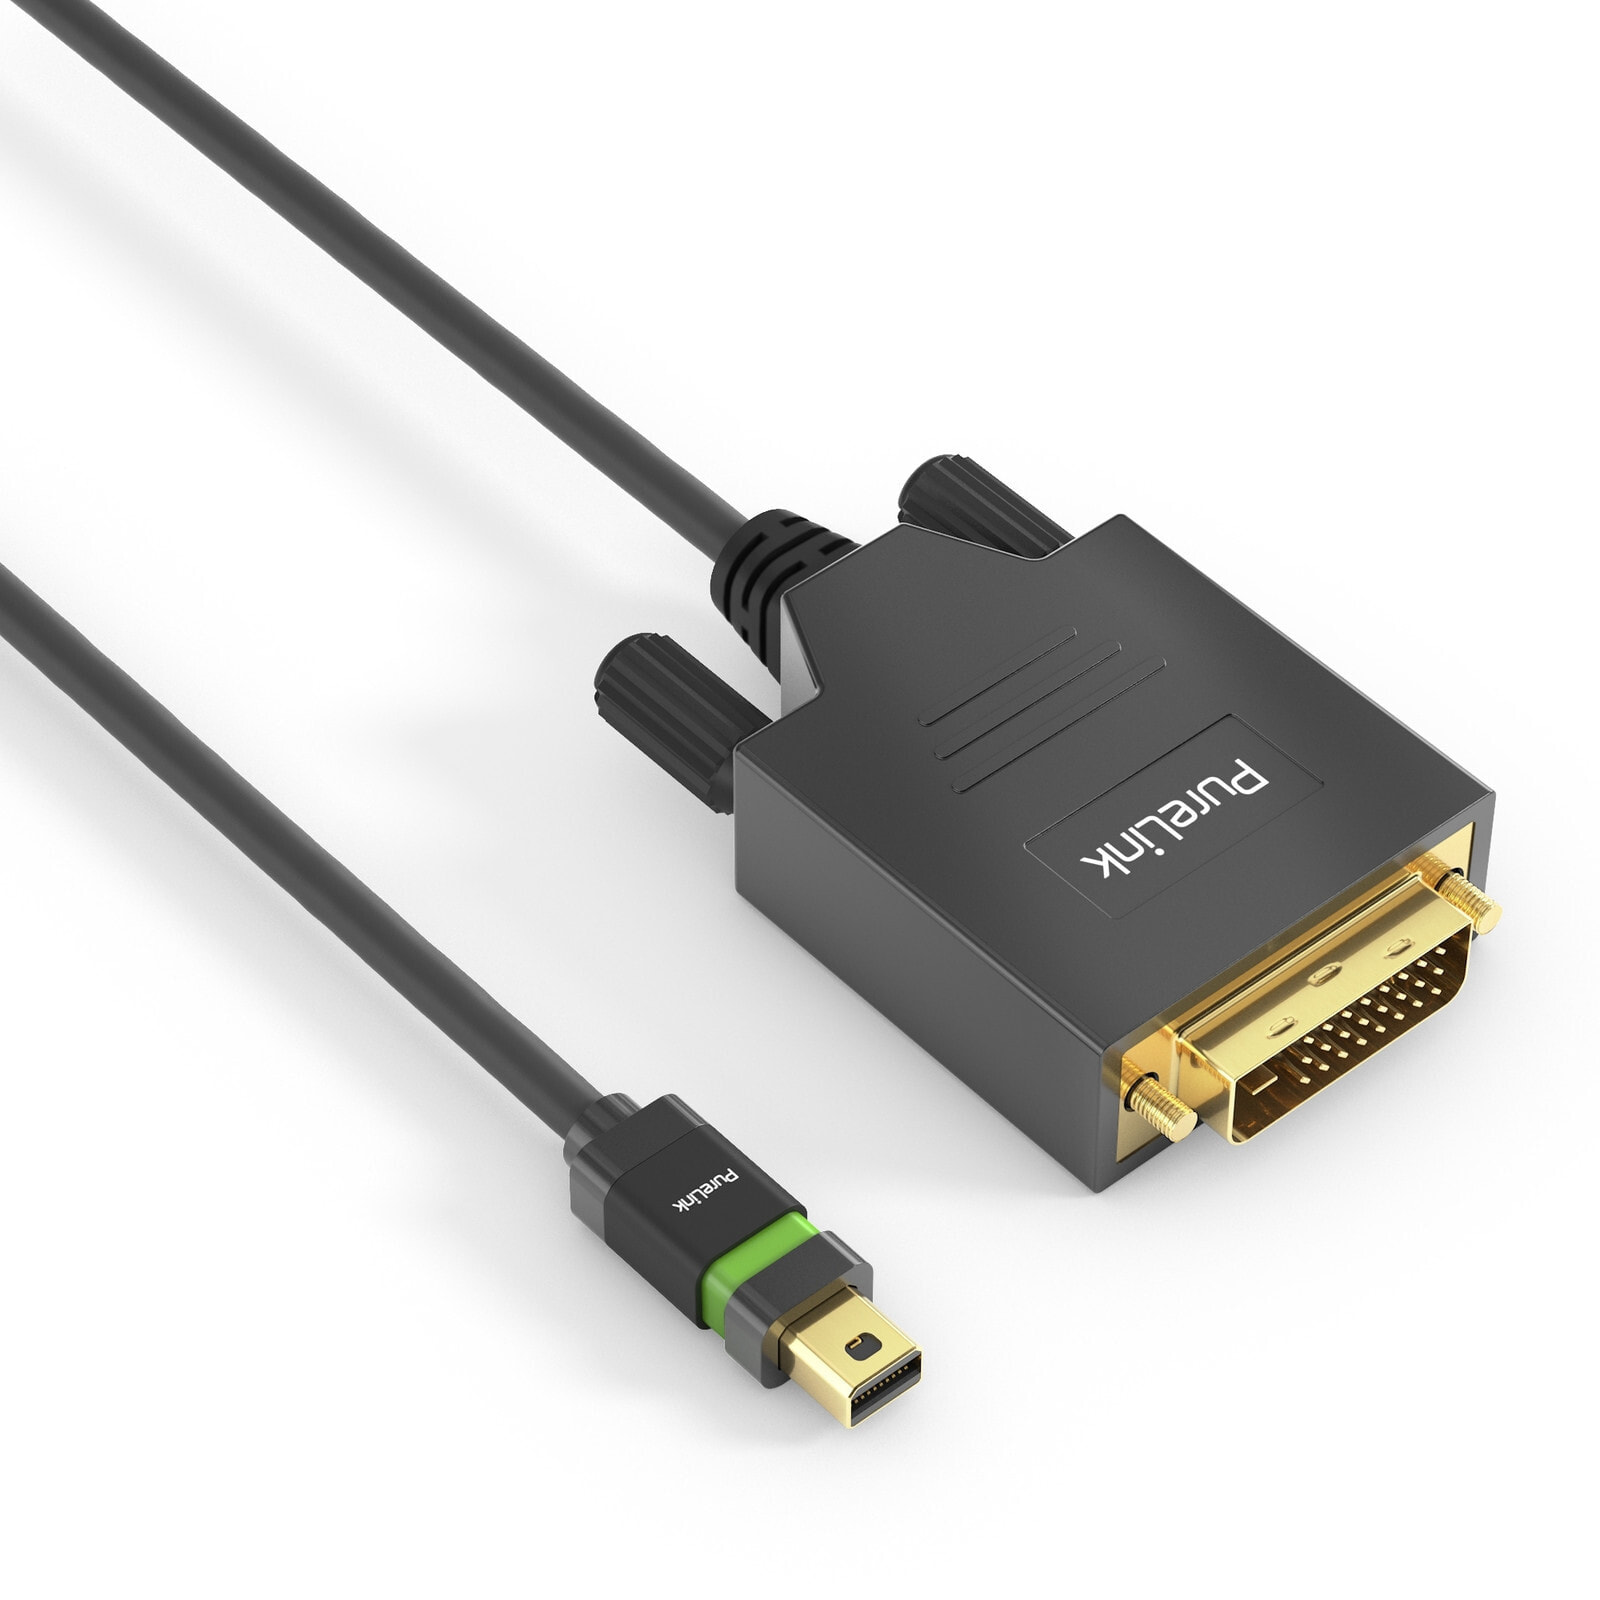 PureLink ULS2100-020 видео кабель адаптер 2 m Mini DisplayPort DVI Черный